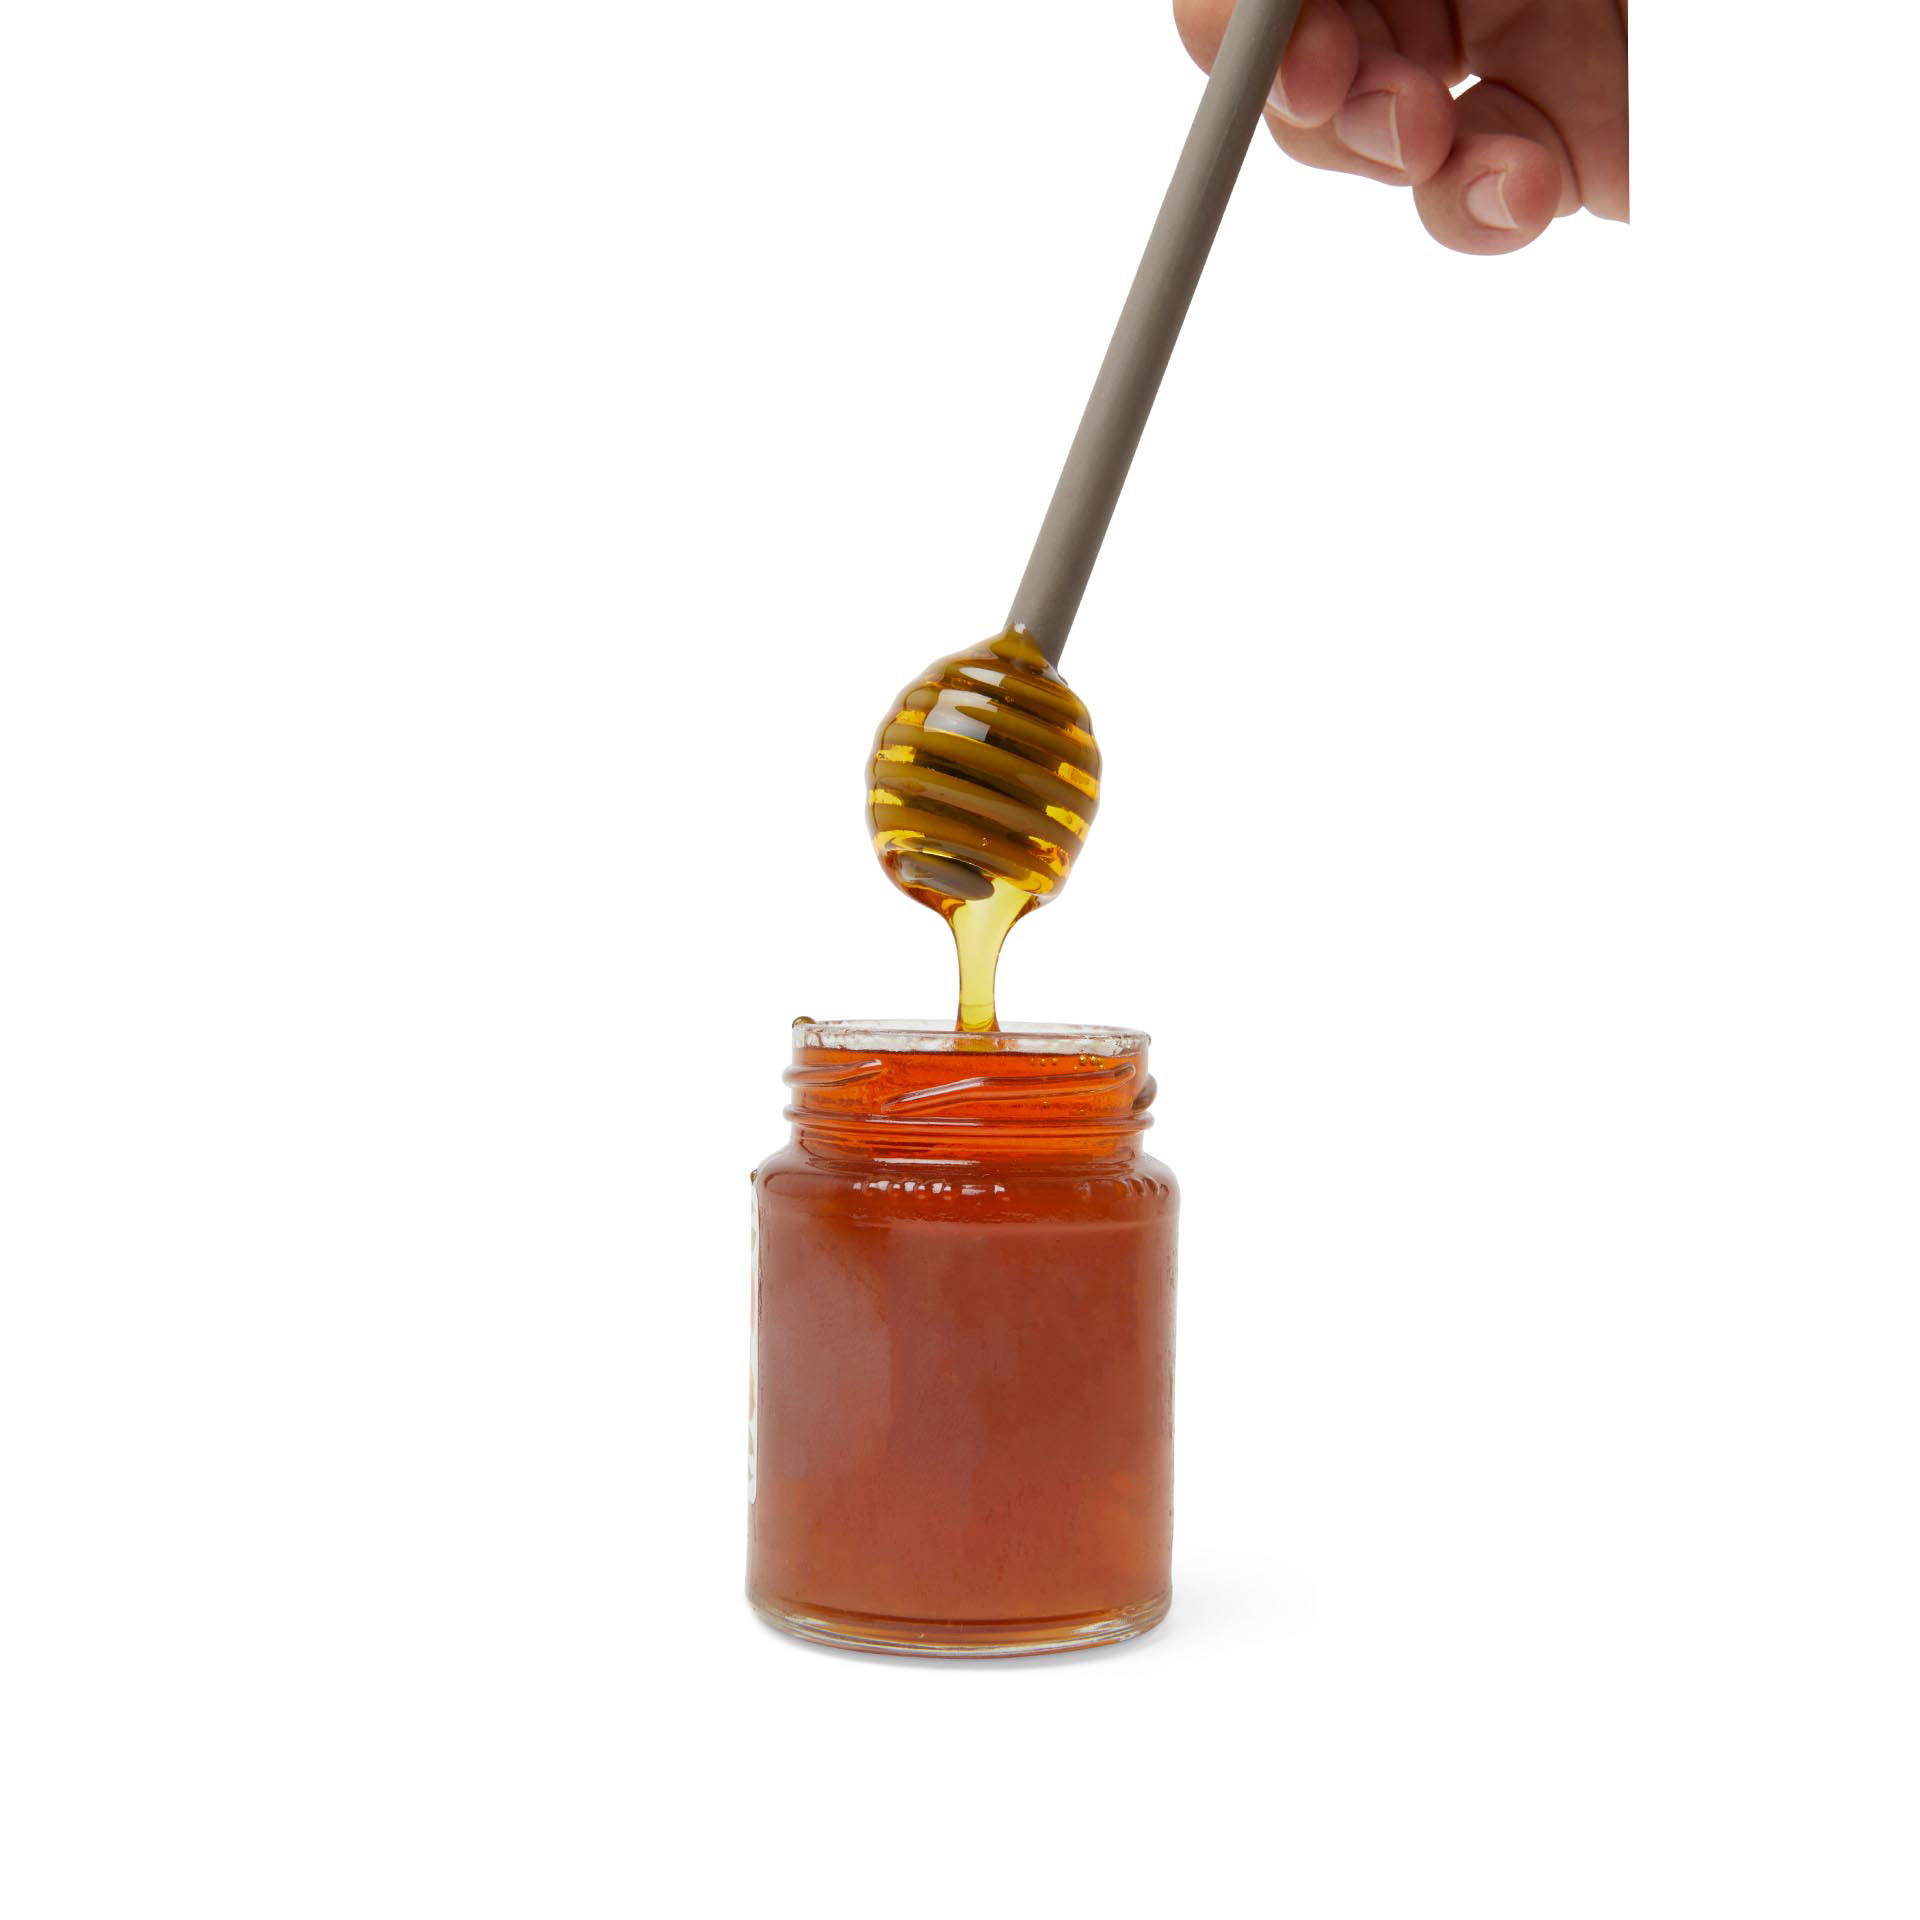 Cucchiaio in silicone per miele, , large